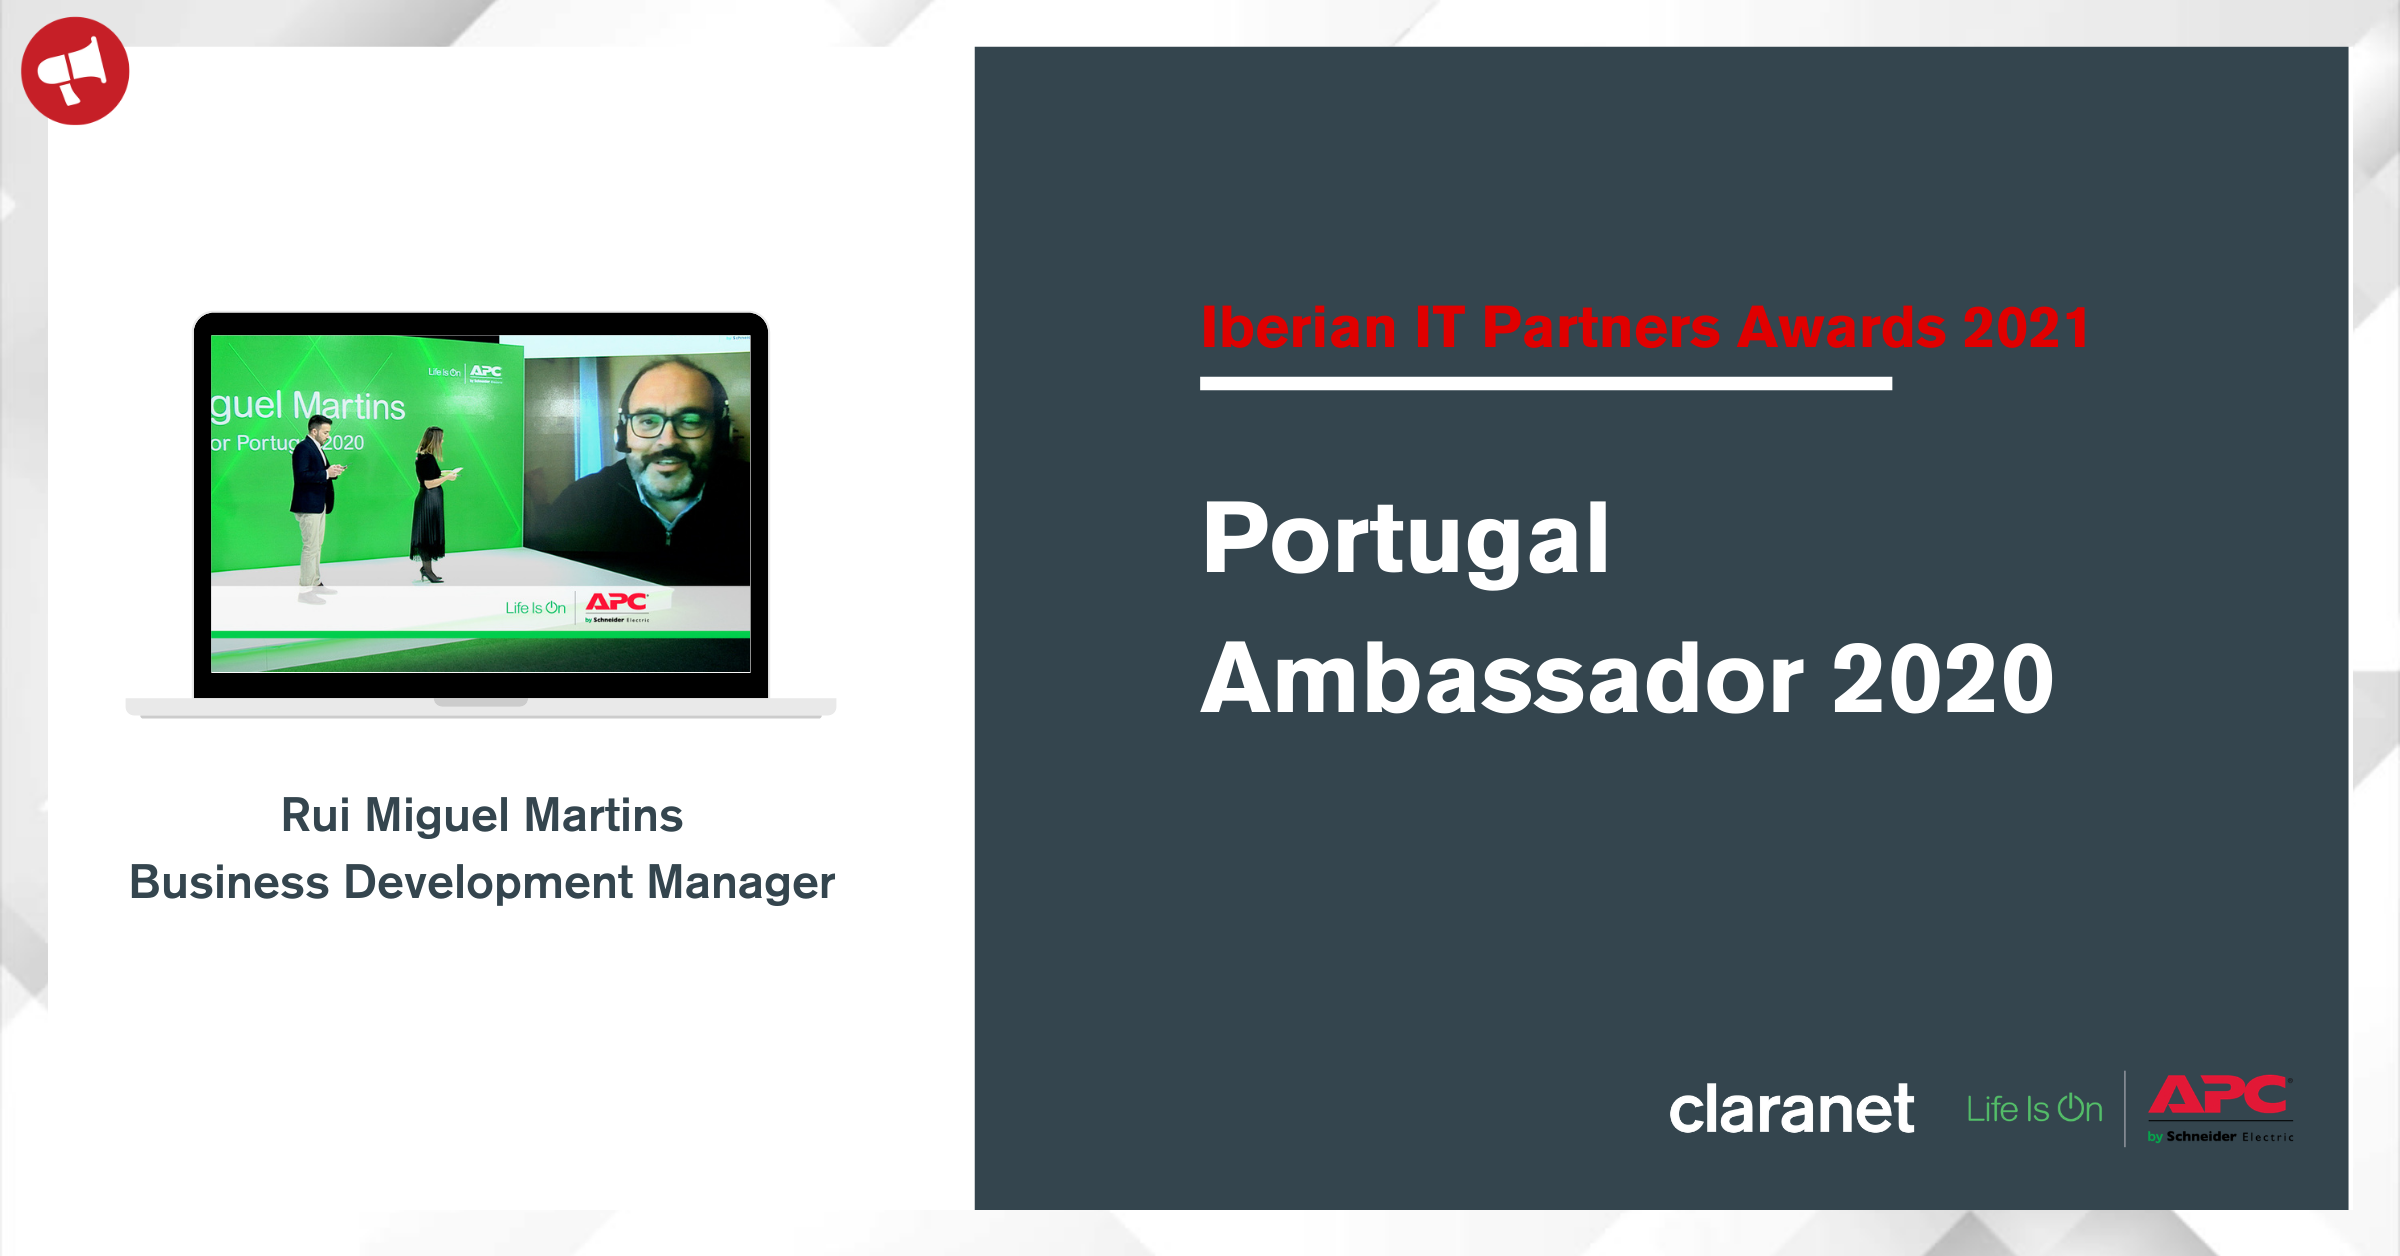 Claranet - Schneider Portugal Ambassador 2020